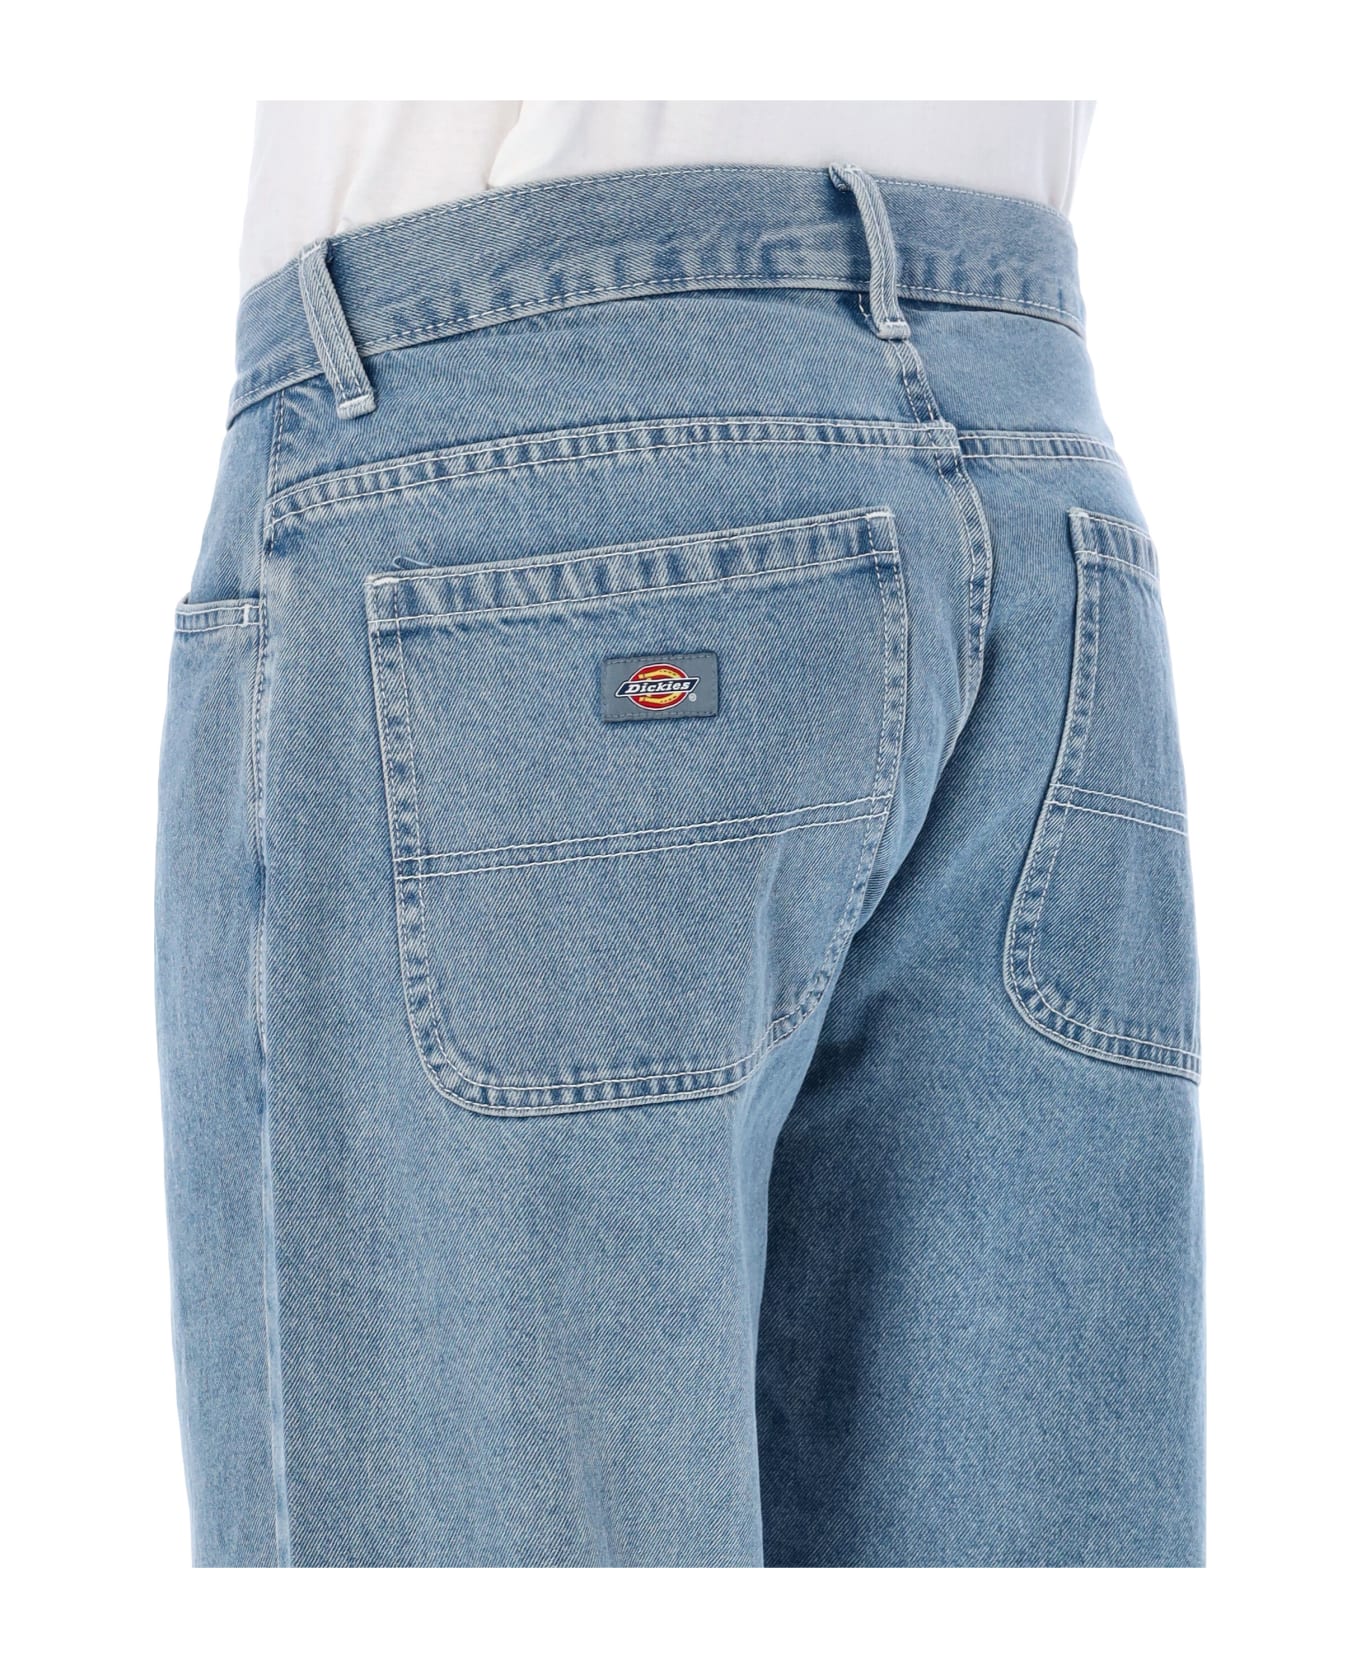 Dickies Double Knee Denim Jeans - LIGHT BLUE デニム